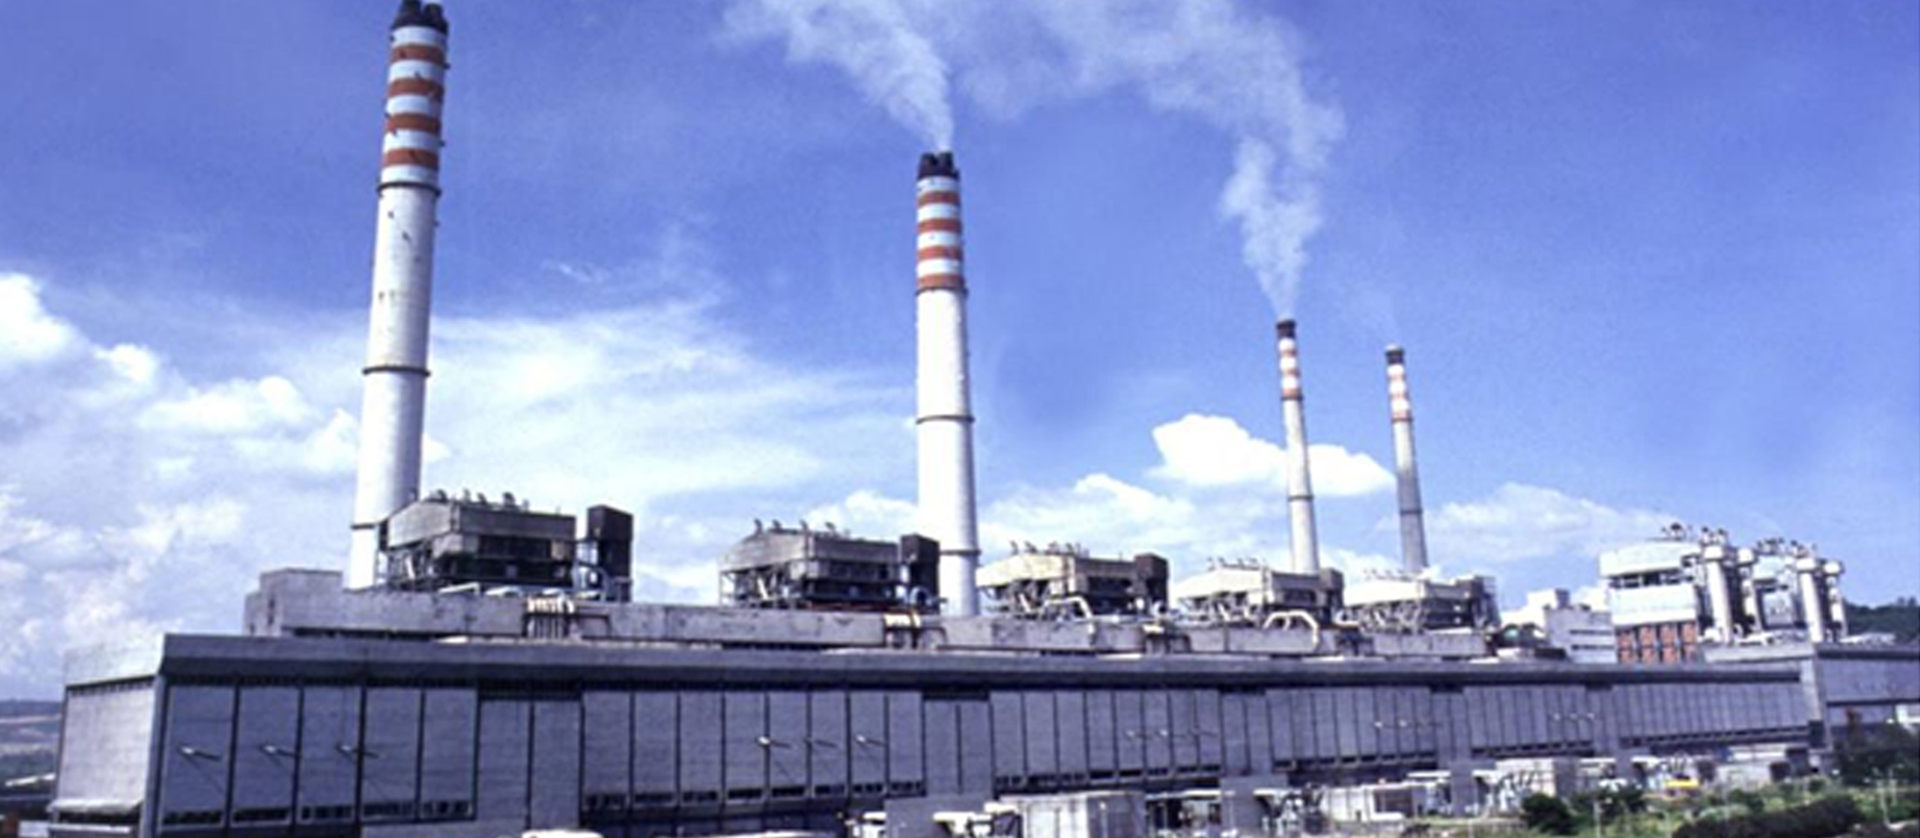 Super Thermal Power Station: Singrauli, Uttar Pradesh